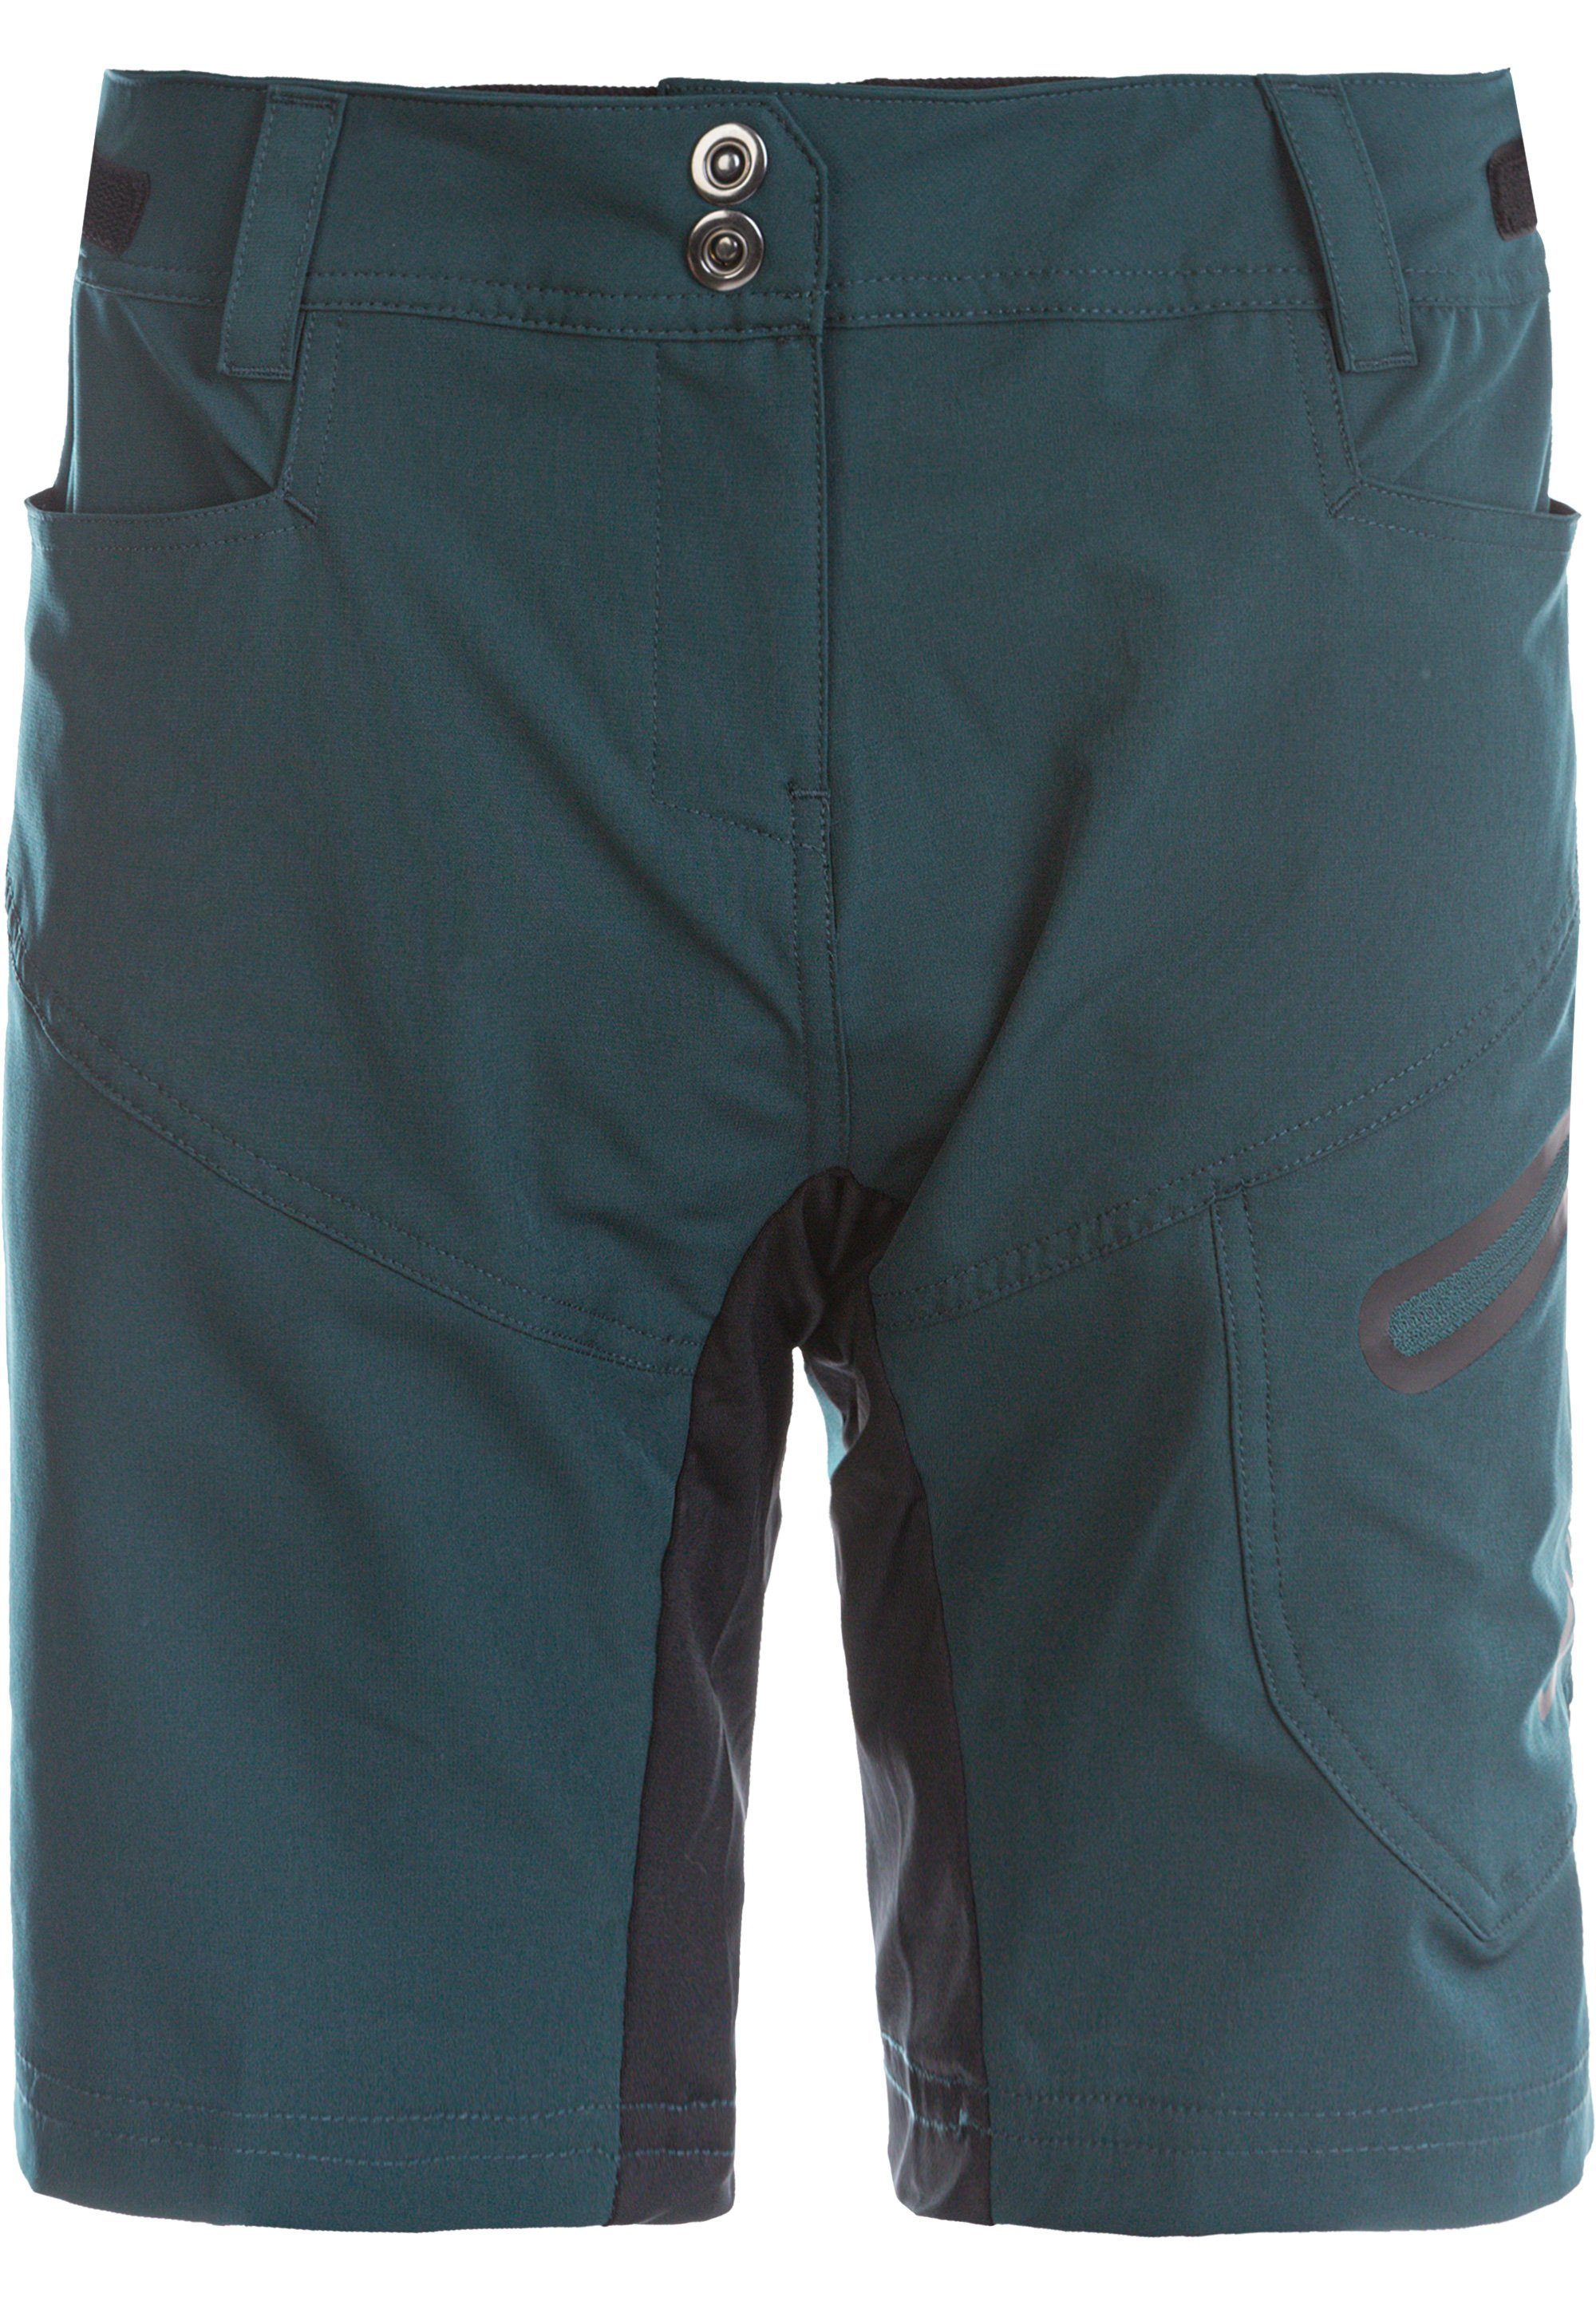 ENDURANCE Radhose Jamilla 1 mit Innen-Tights in Shorts W 2 herausnehmbarer dunkelgrün